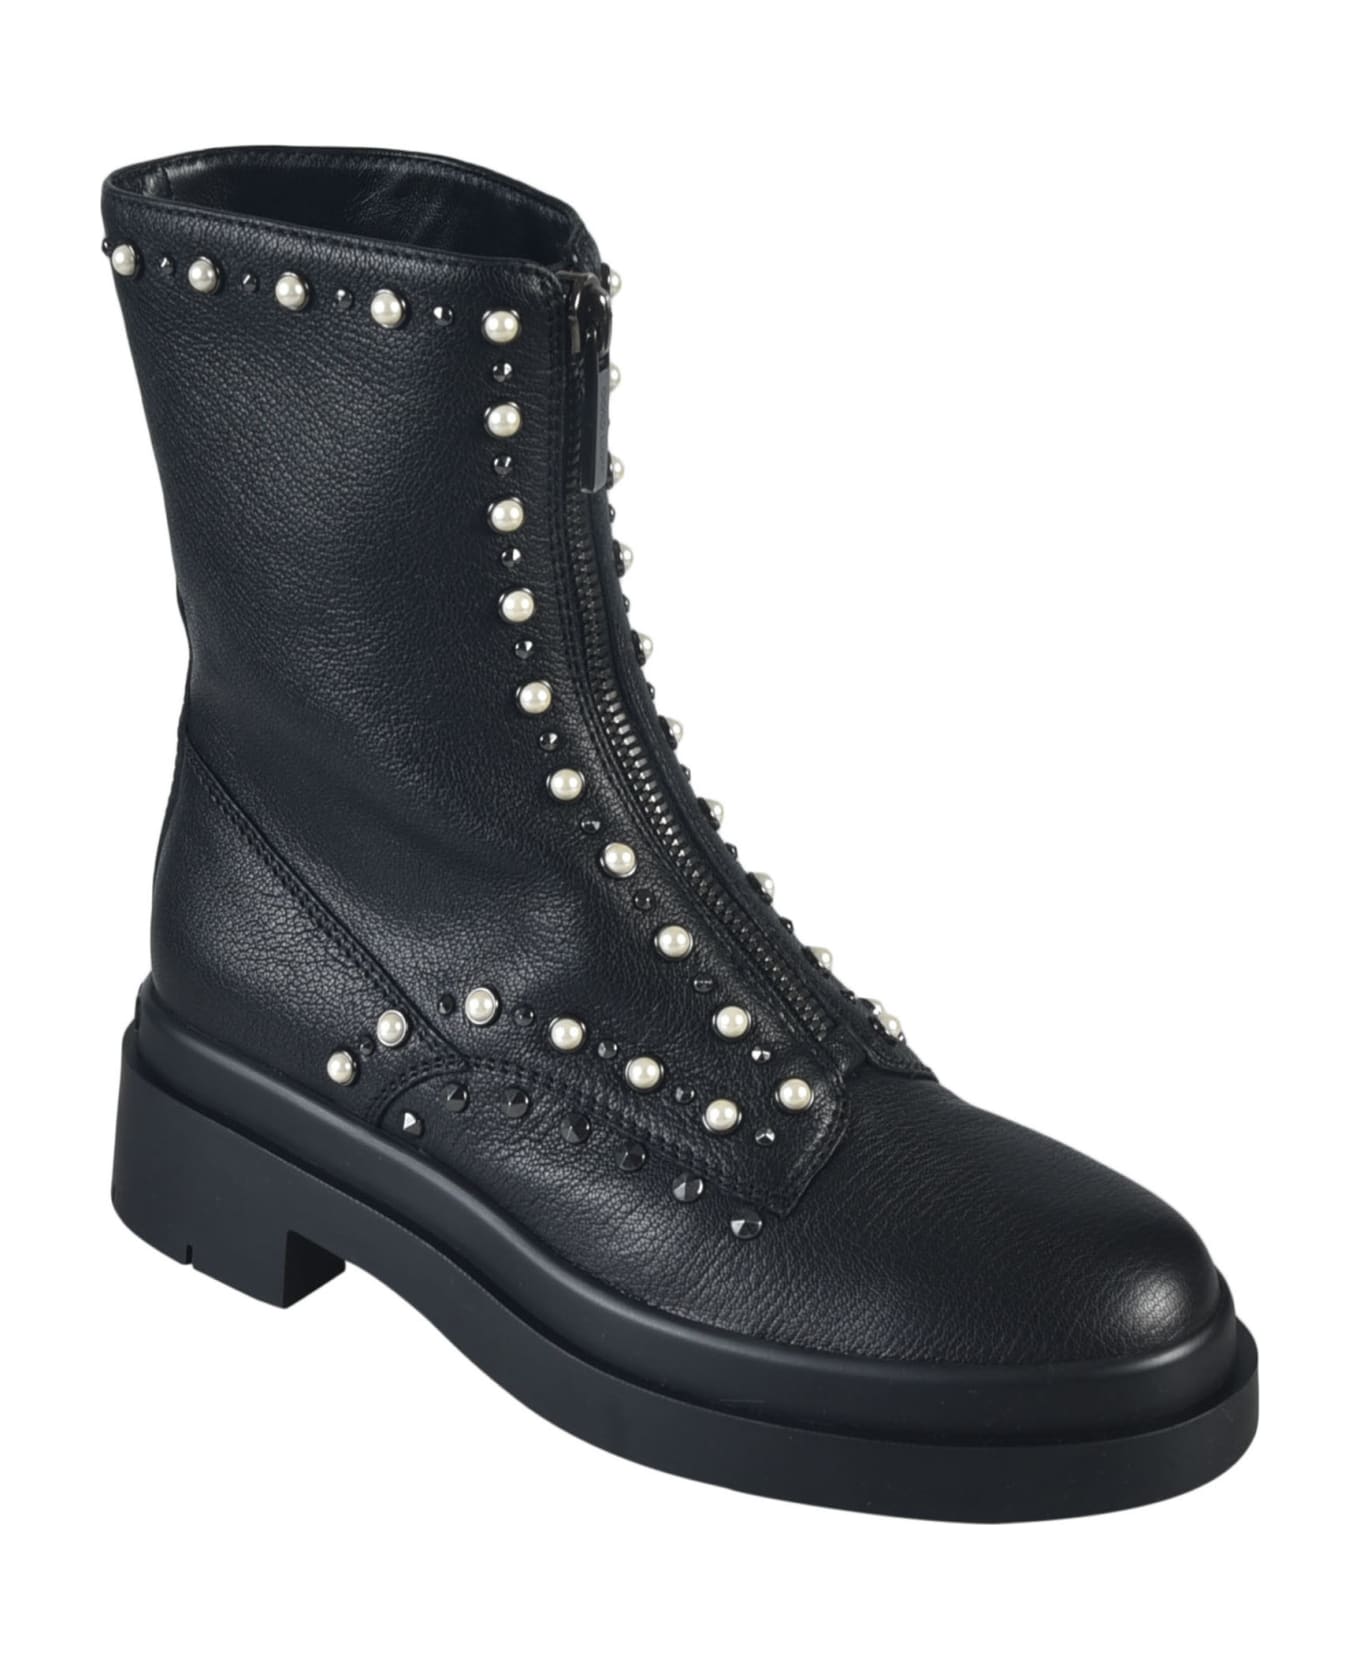 Jimmy Choo Nola Flat Boots - Black/Pearl/Gunmetal ブーツ